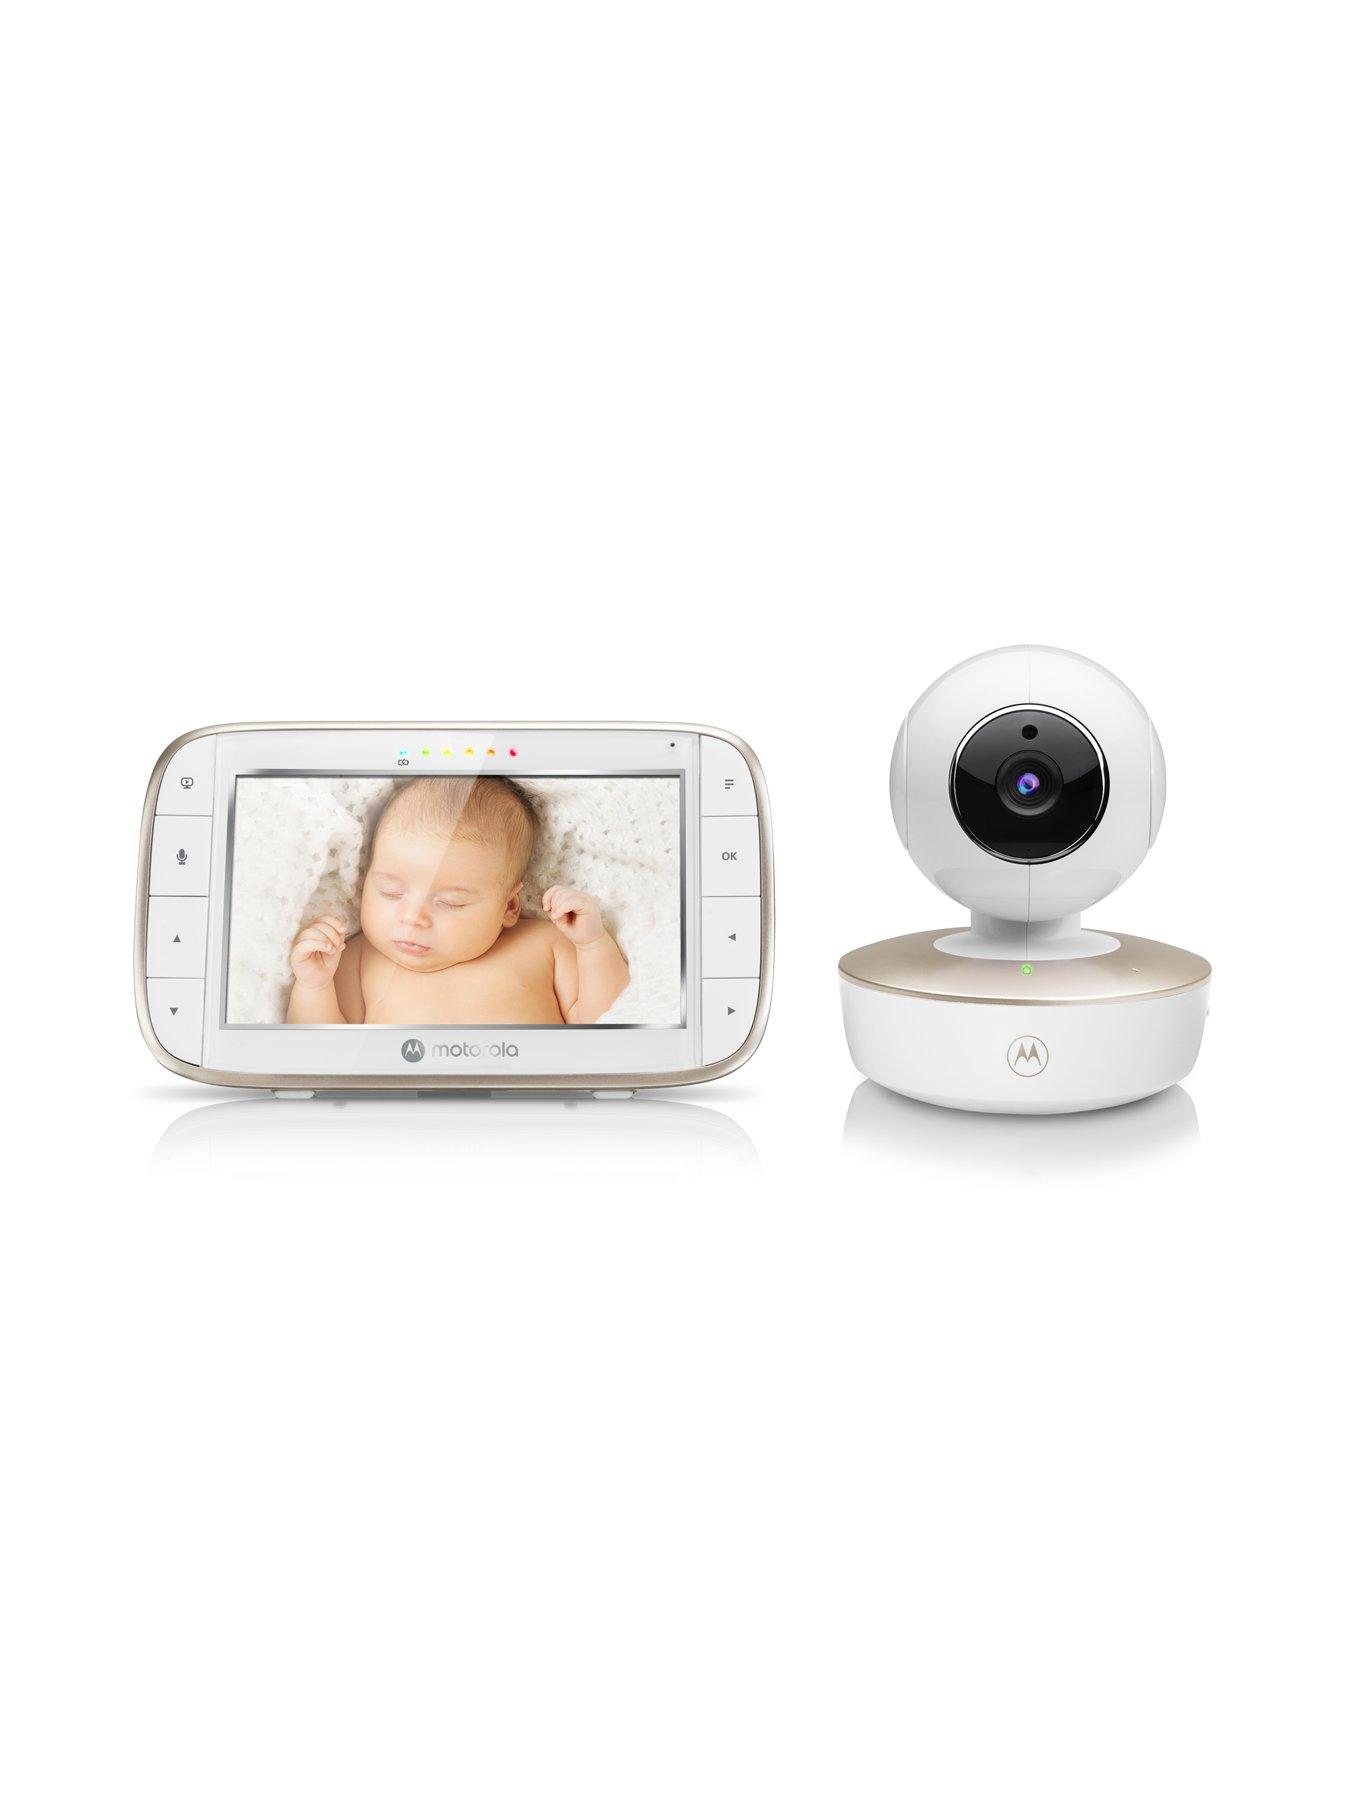 Motorola Vm855 Smart Connect Wi-Fi Video Baby Monitor With Motorola Nursery App And 5" Parent Unit